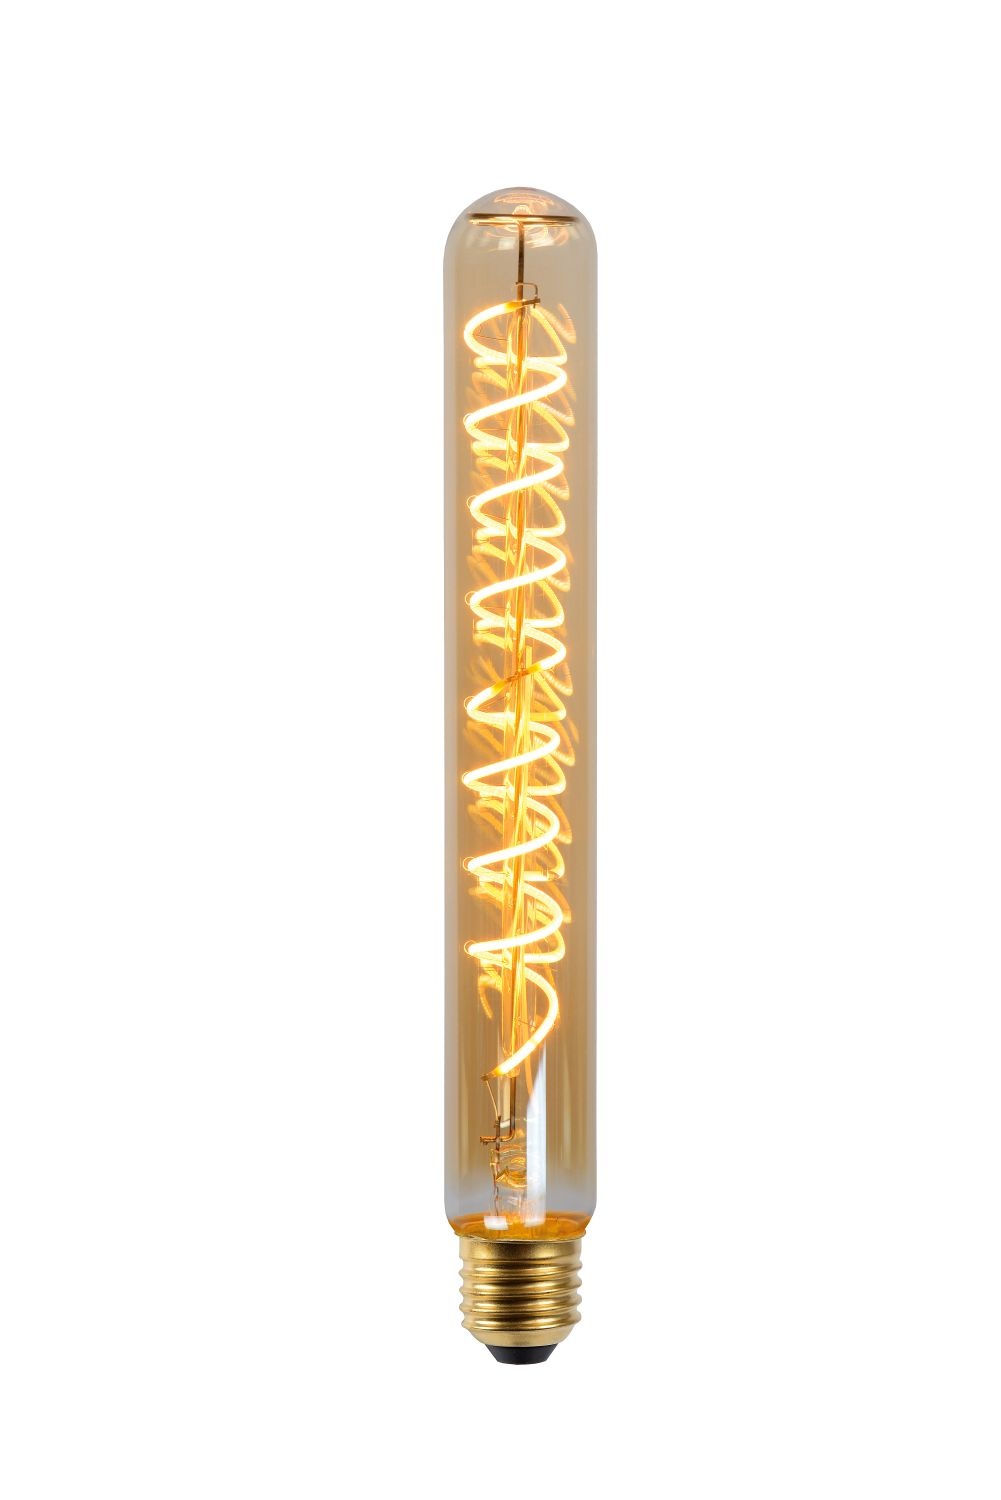 Indiener Zeggen gloeilamp Lucide Led Bulb - Filament lamp Ø 3,2 cm LED Dimb. E27 1x5W 2200K Amber  kopen? - Industrieel Wonen